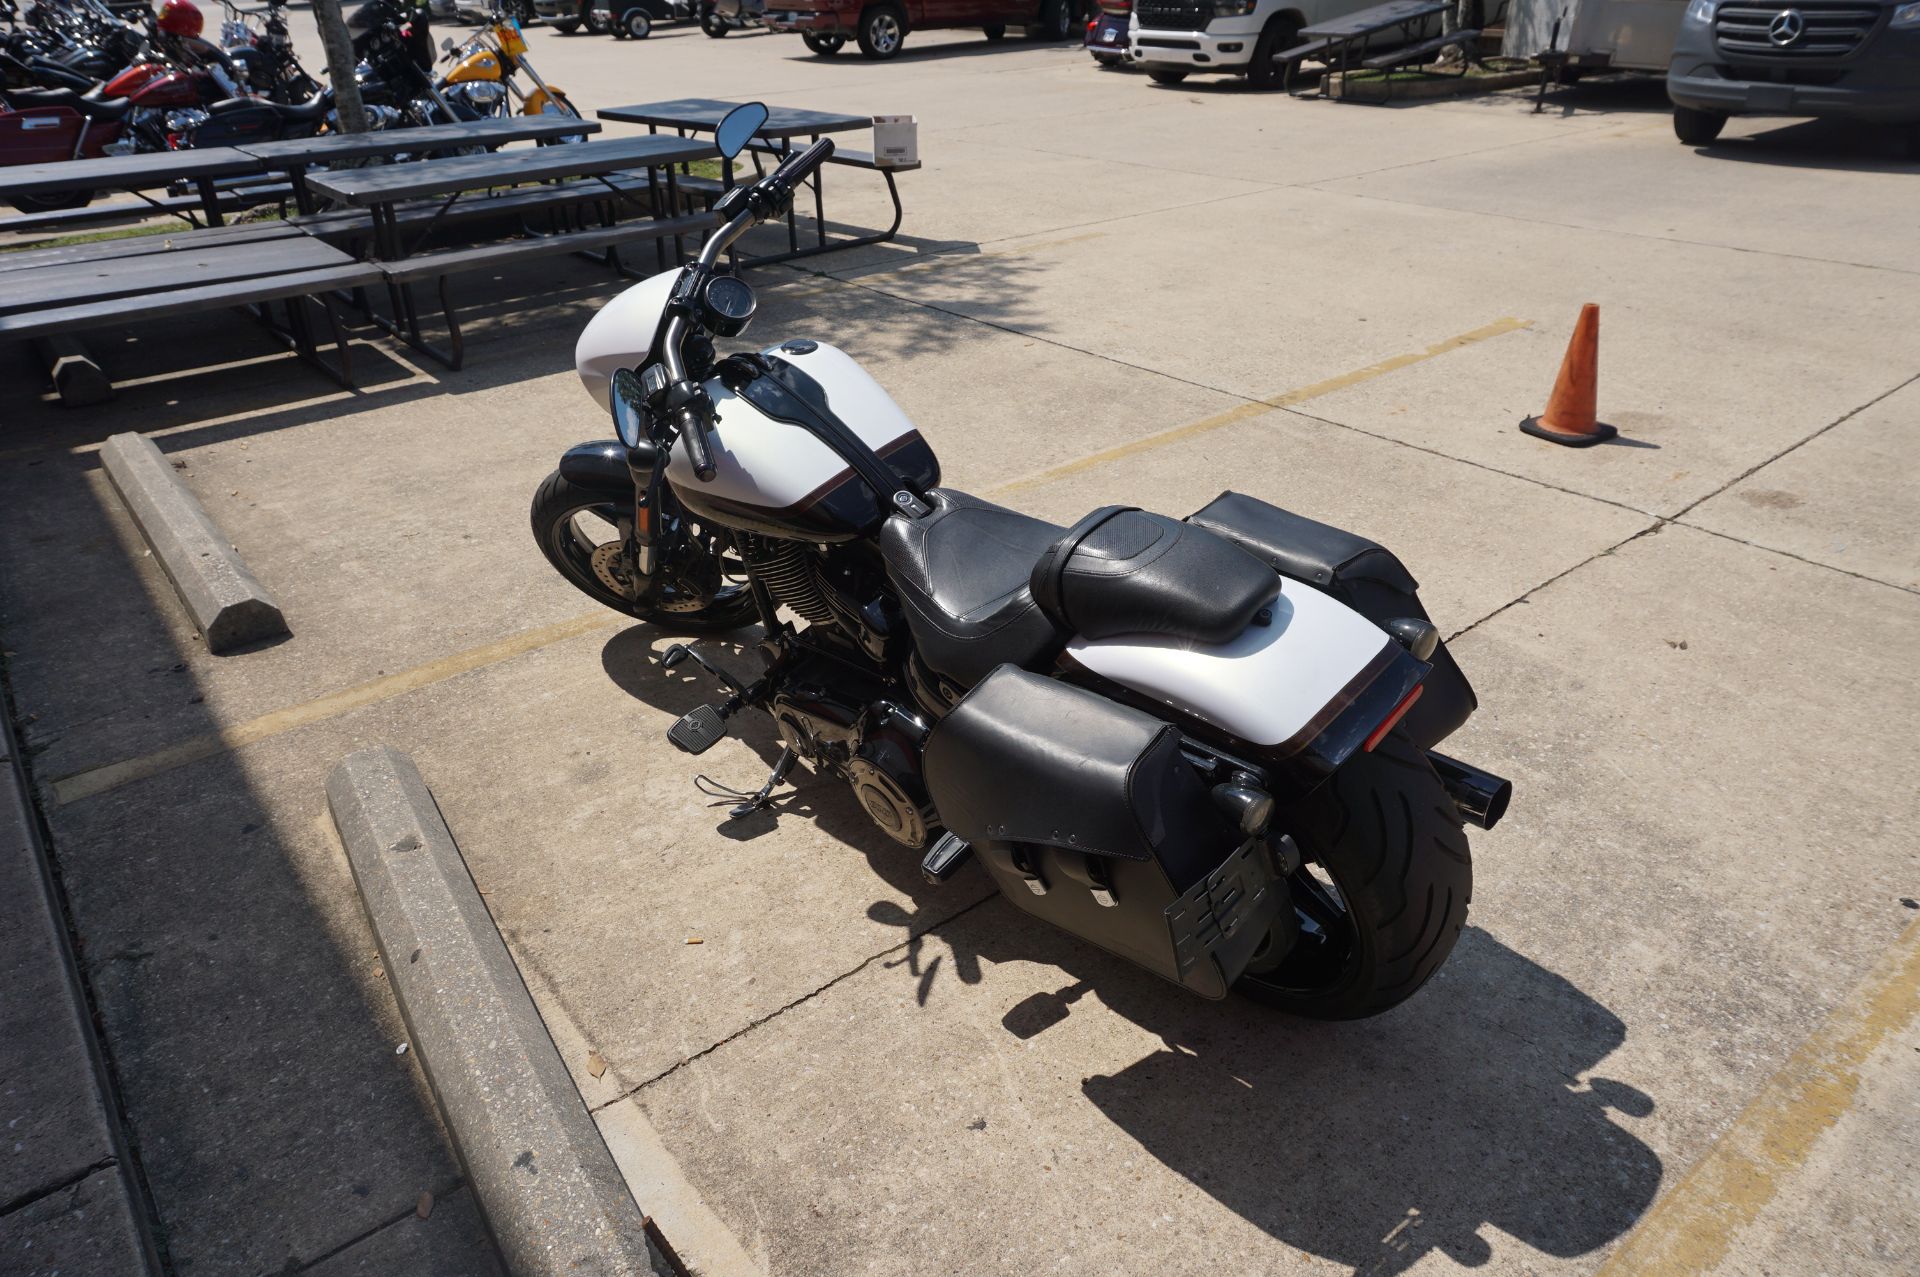 2017 Harley-Davidson CVO™ Pro Street Breakout® in Metairie, Louisiana - Photo 17